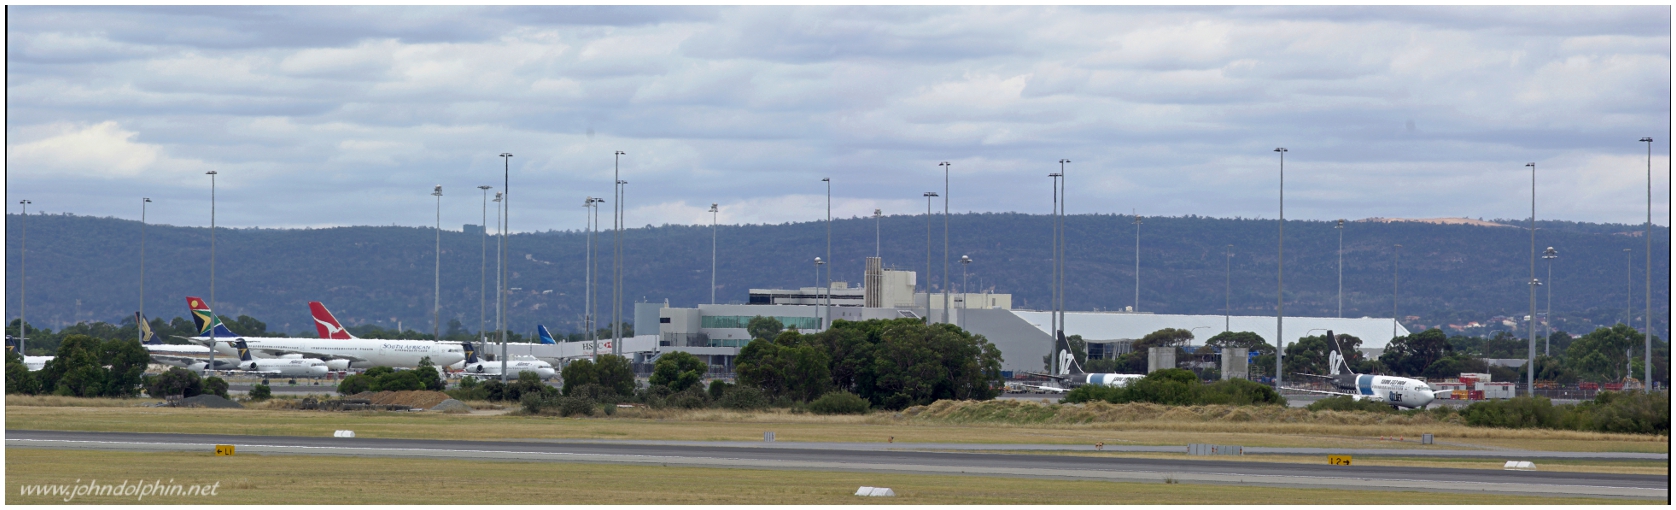 Perth Airport Viewing Platform 5